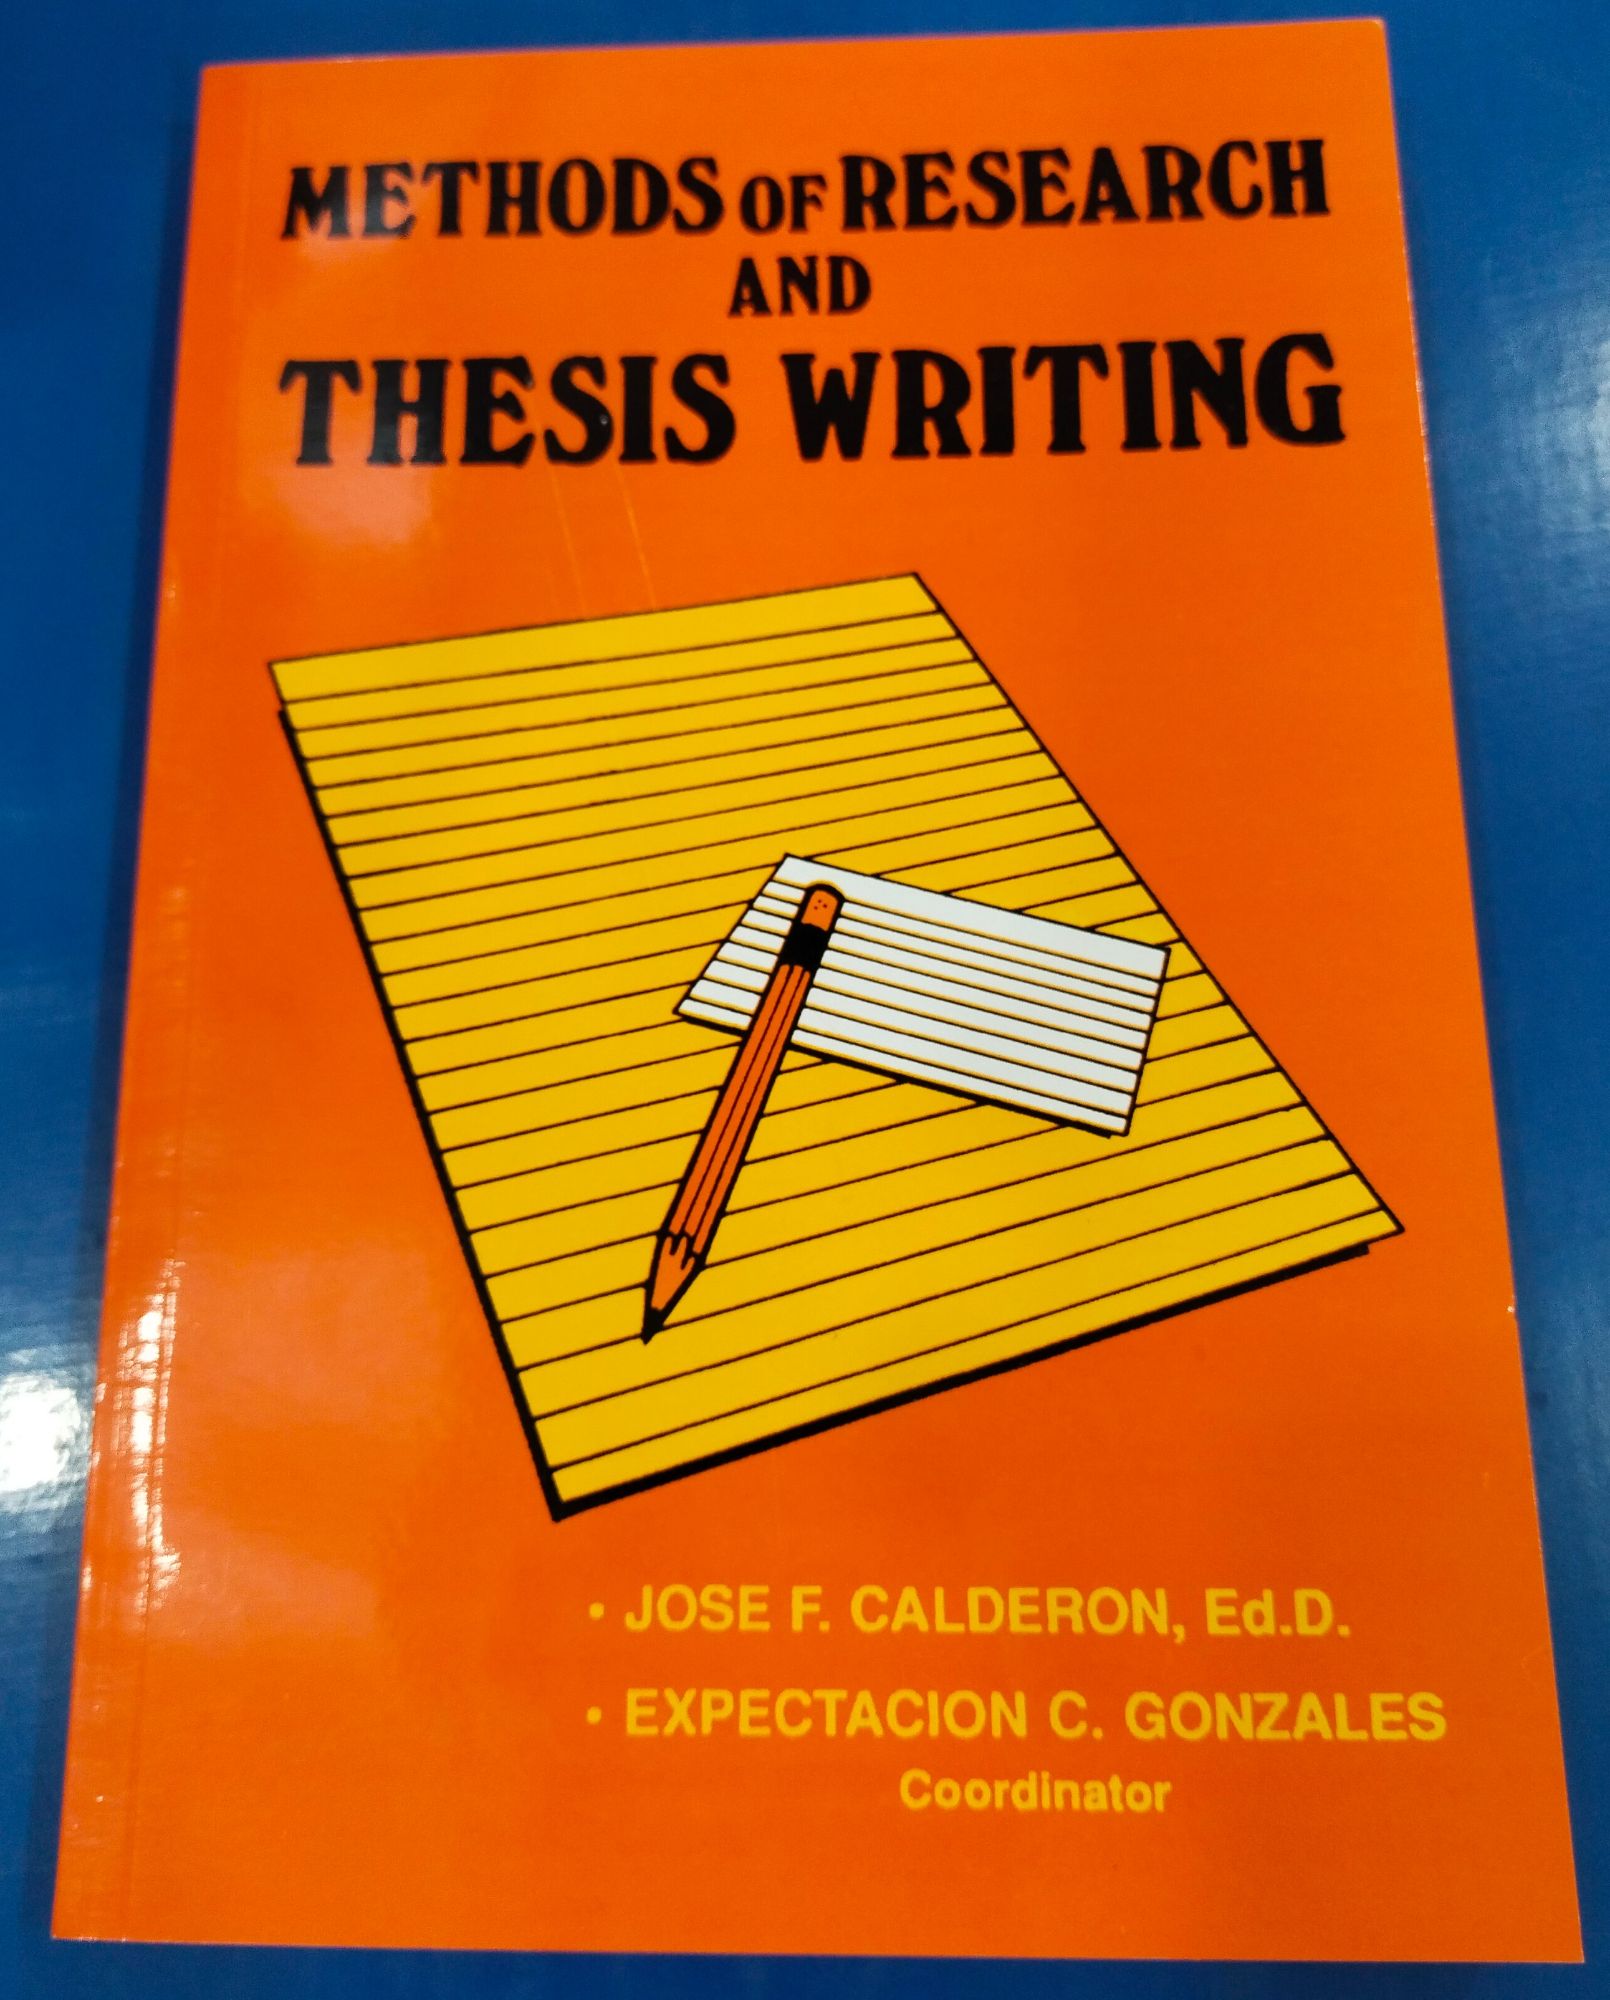 thesis writing by calderon